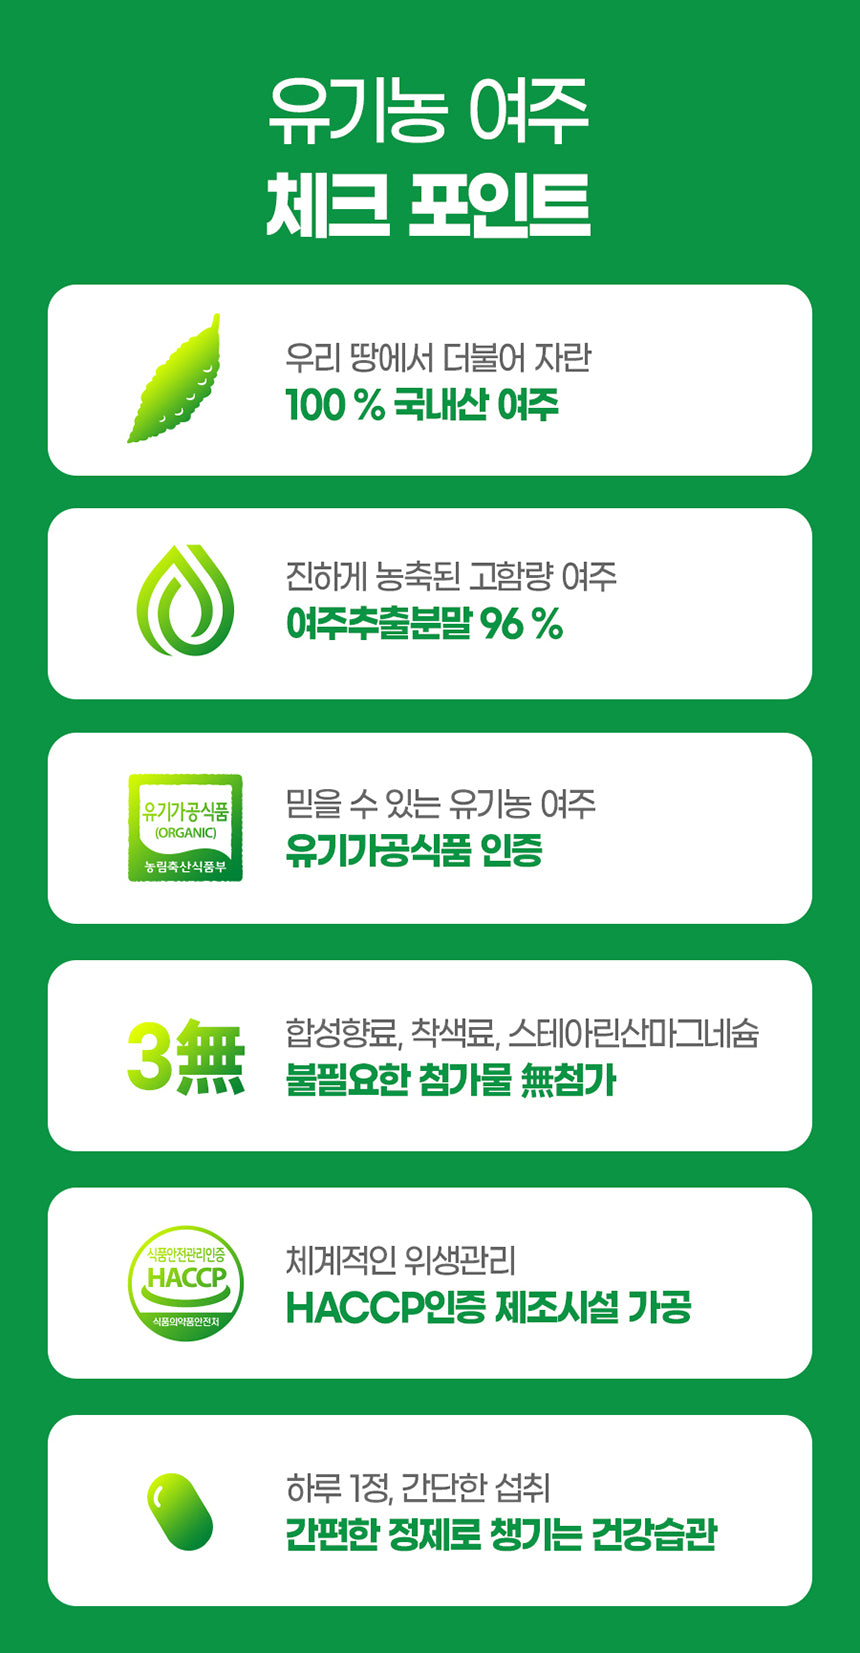 Naturalplus Organic Bitter Melon Premium 500mg 90 Tablets Health Supplements Gifts